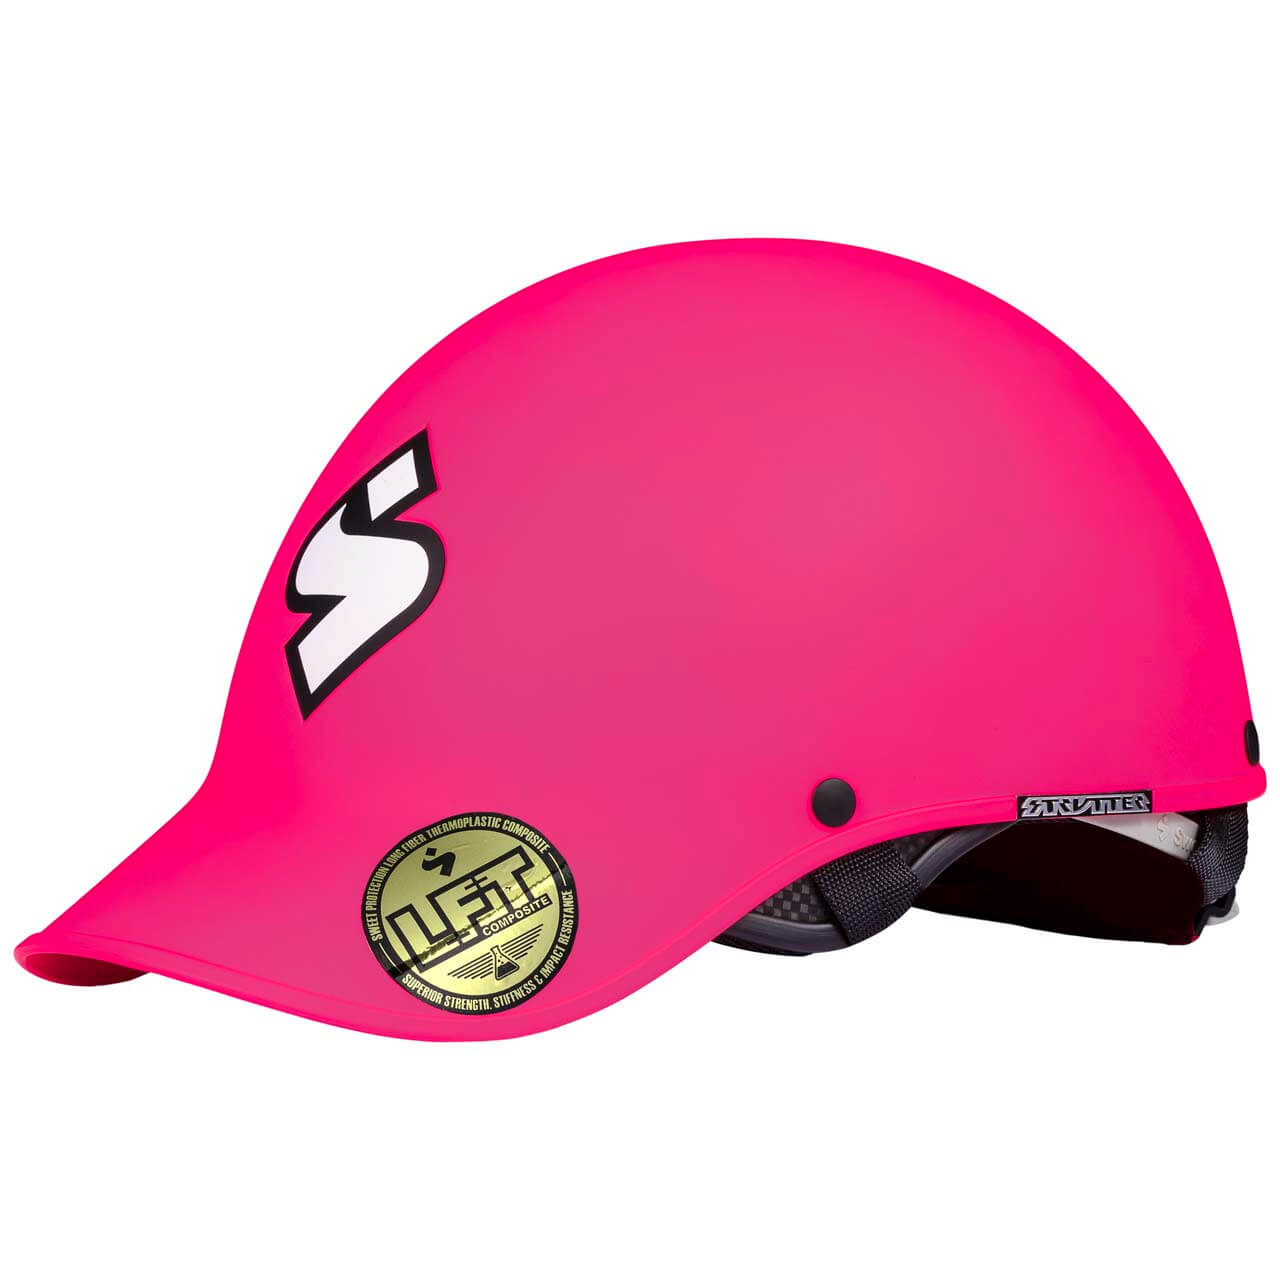 Sweet Strutter Freestyle Kajakhelm - Neon Pink, S/M von Sweet Protection}